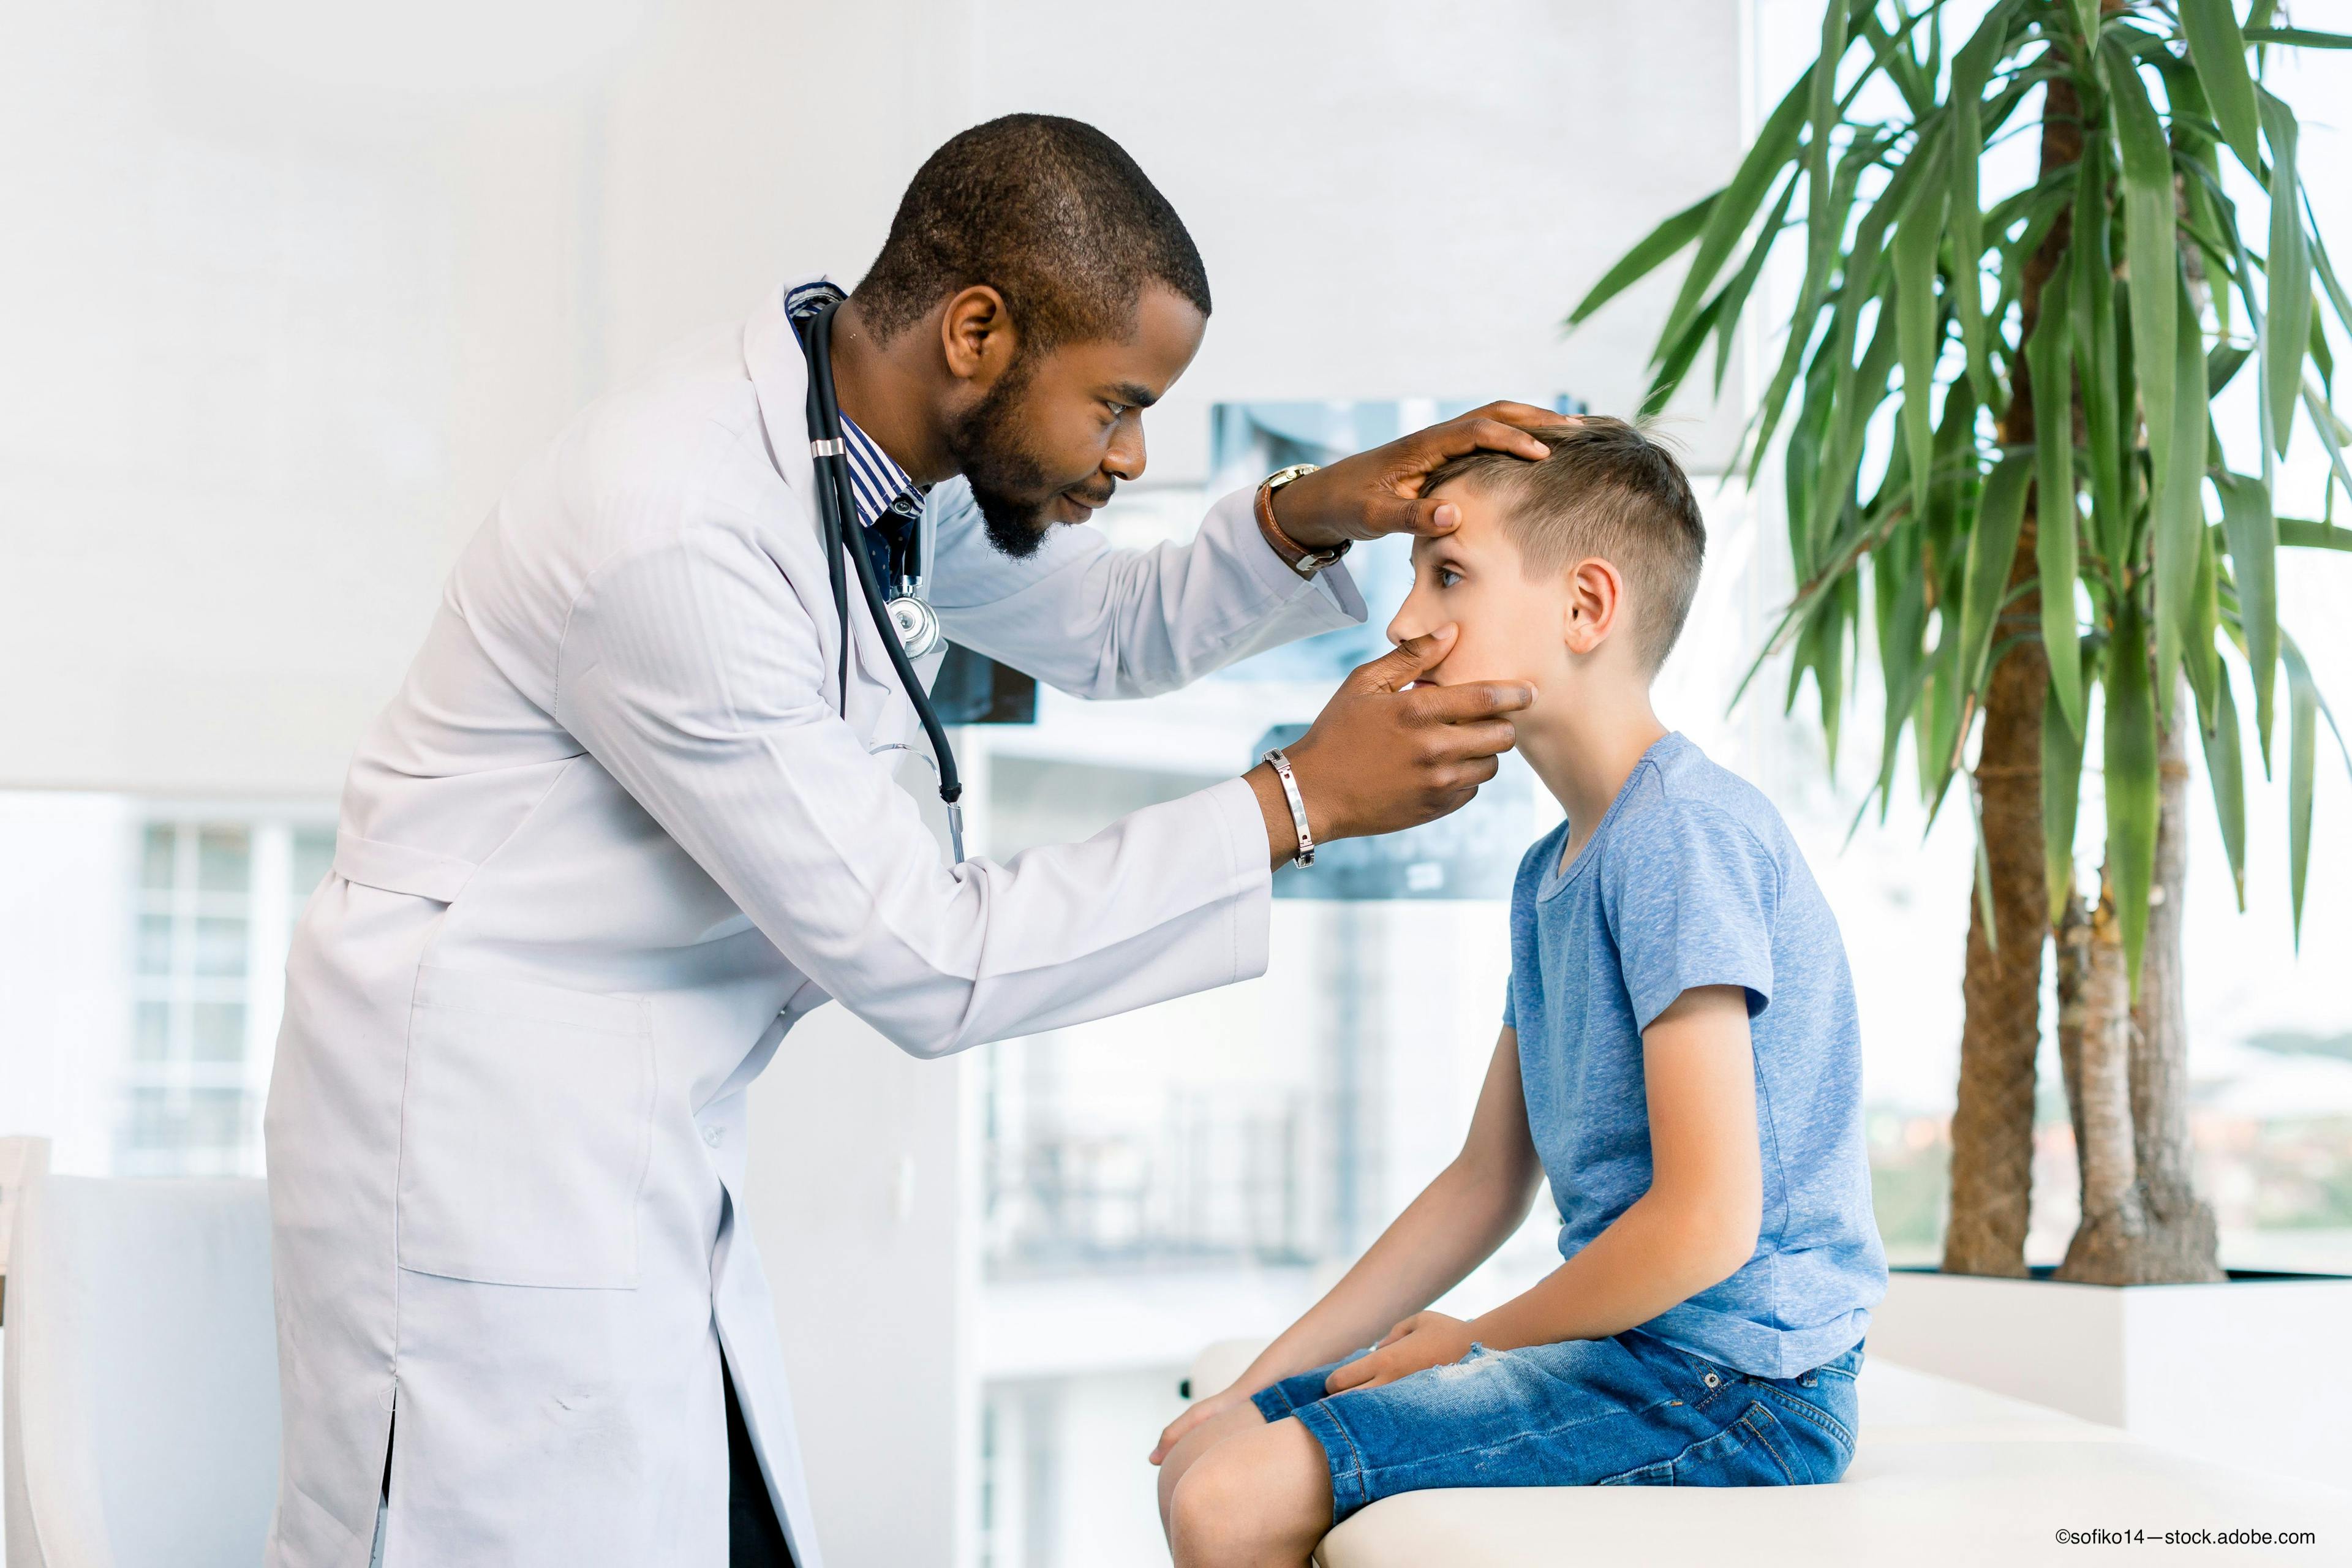 Paediatric ophthalmologists target inherited retinal diseases